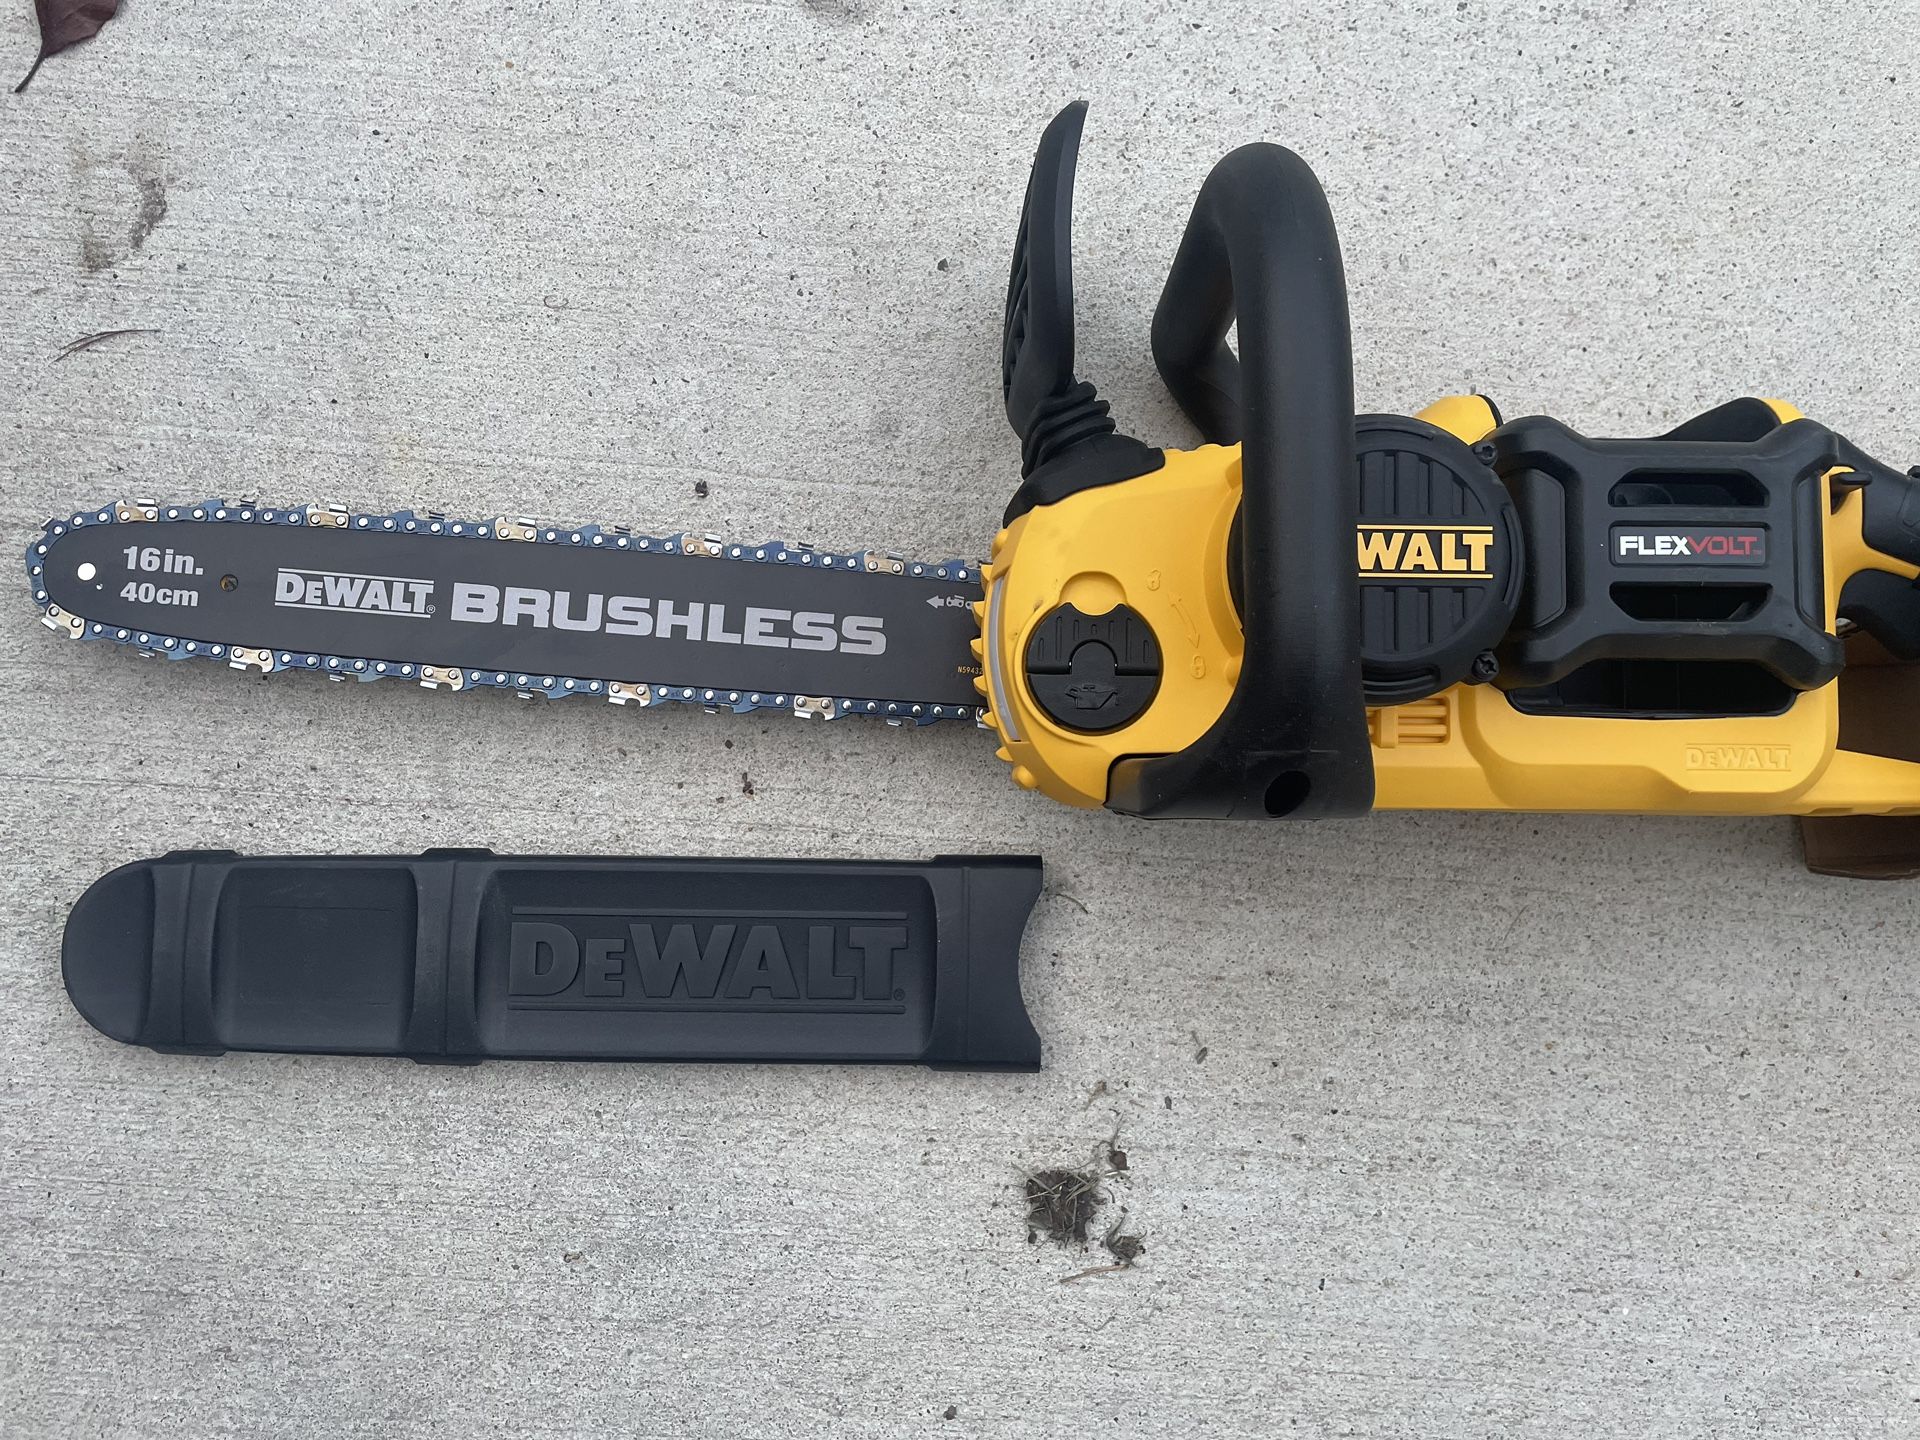 New DeWalt Chainsaw 16” Retail$300 Tool Only